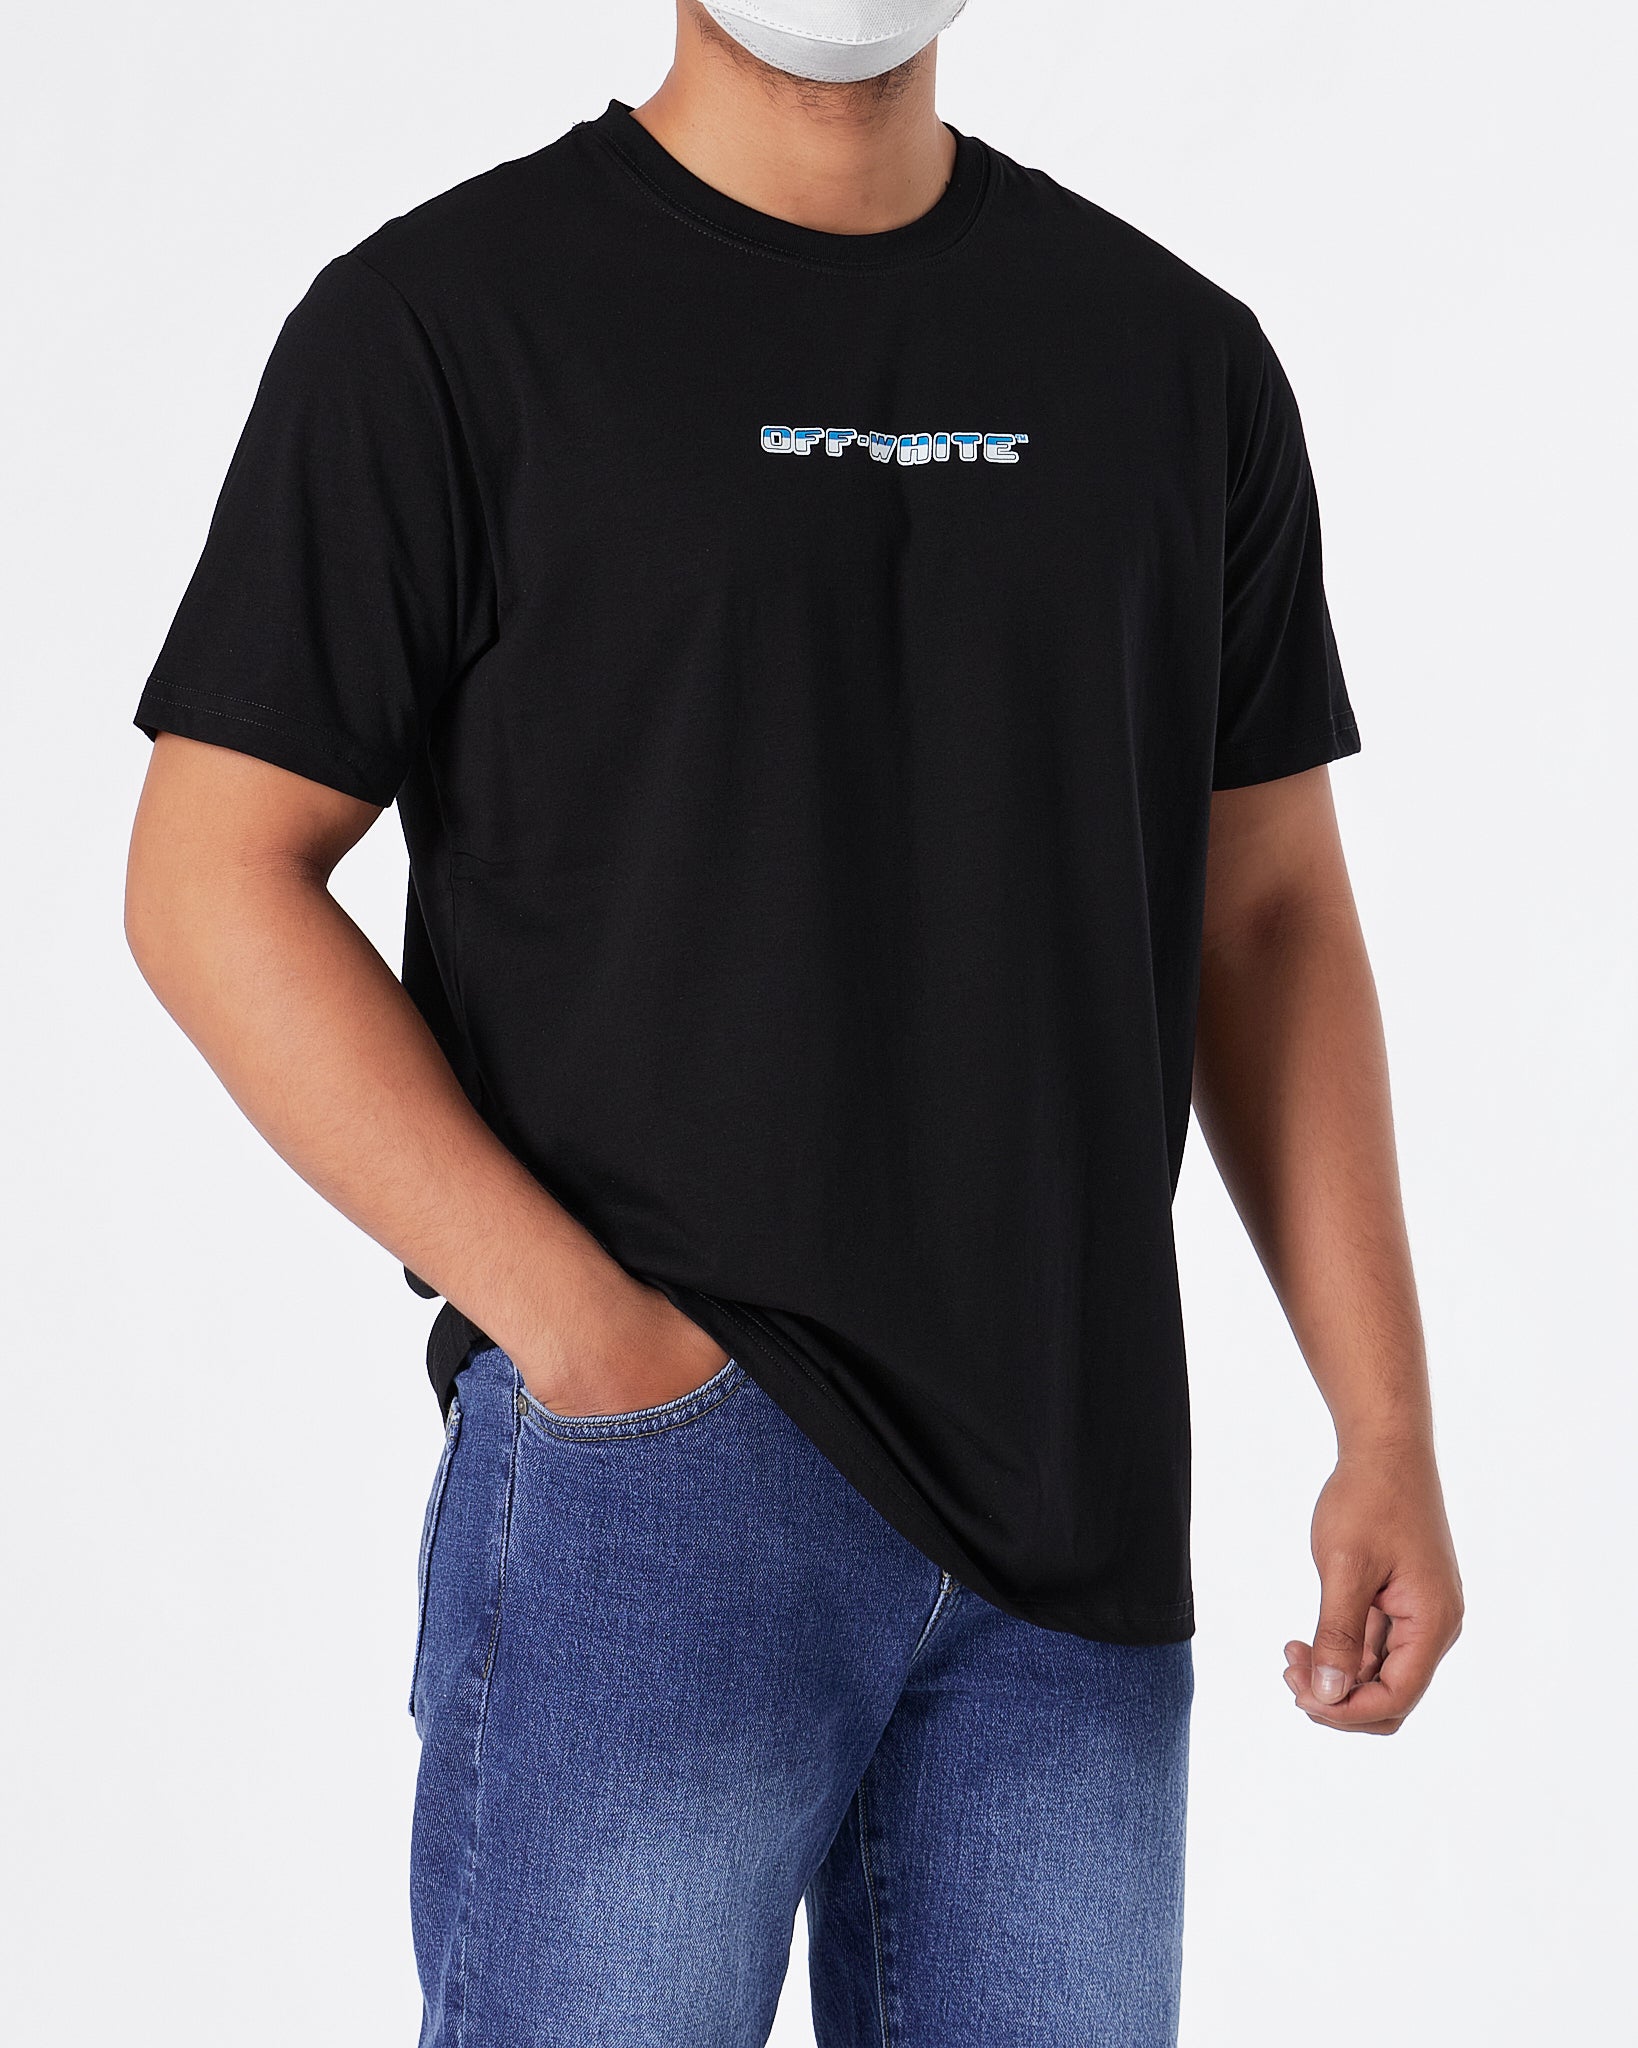 OW Cross Arrow Back Printed Men Black T-Shirt 19.90